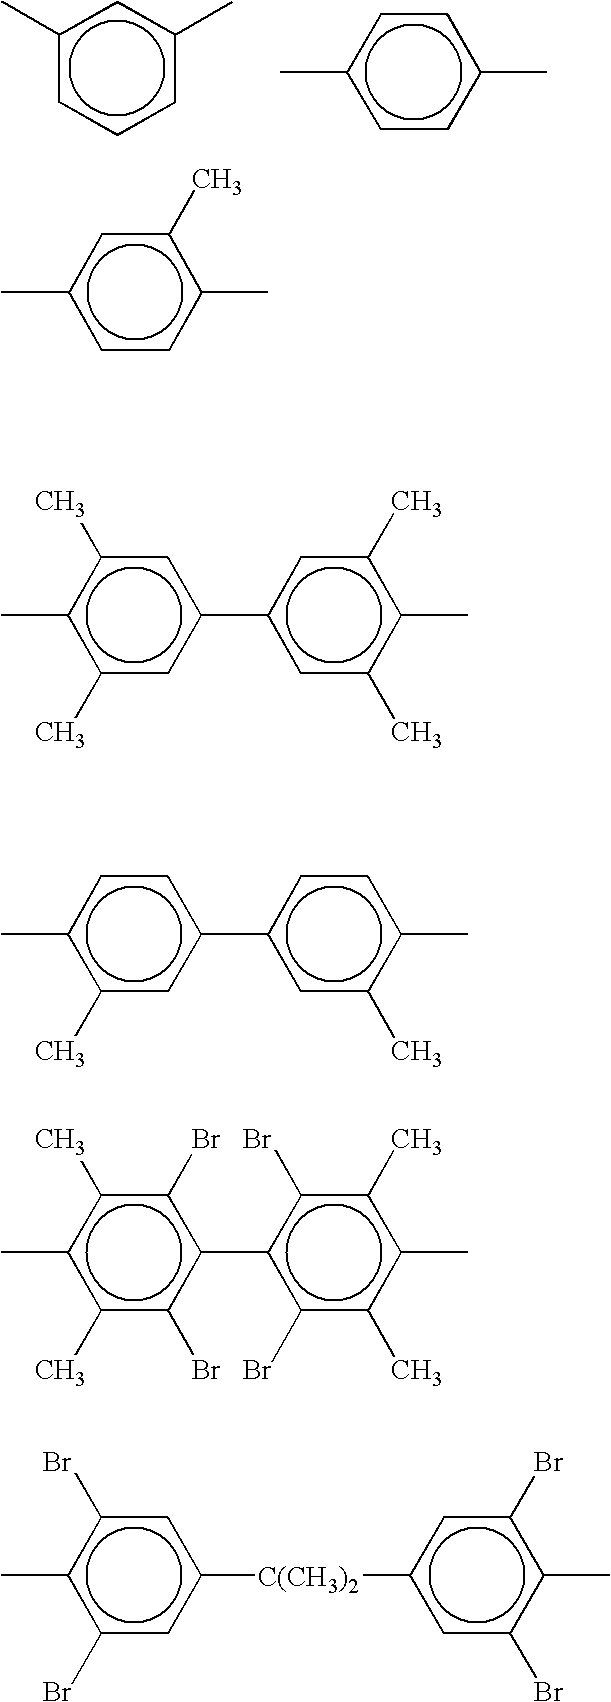 Polycarbonate-ultem block copolymers